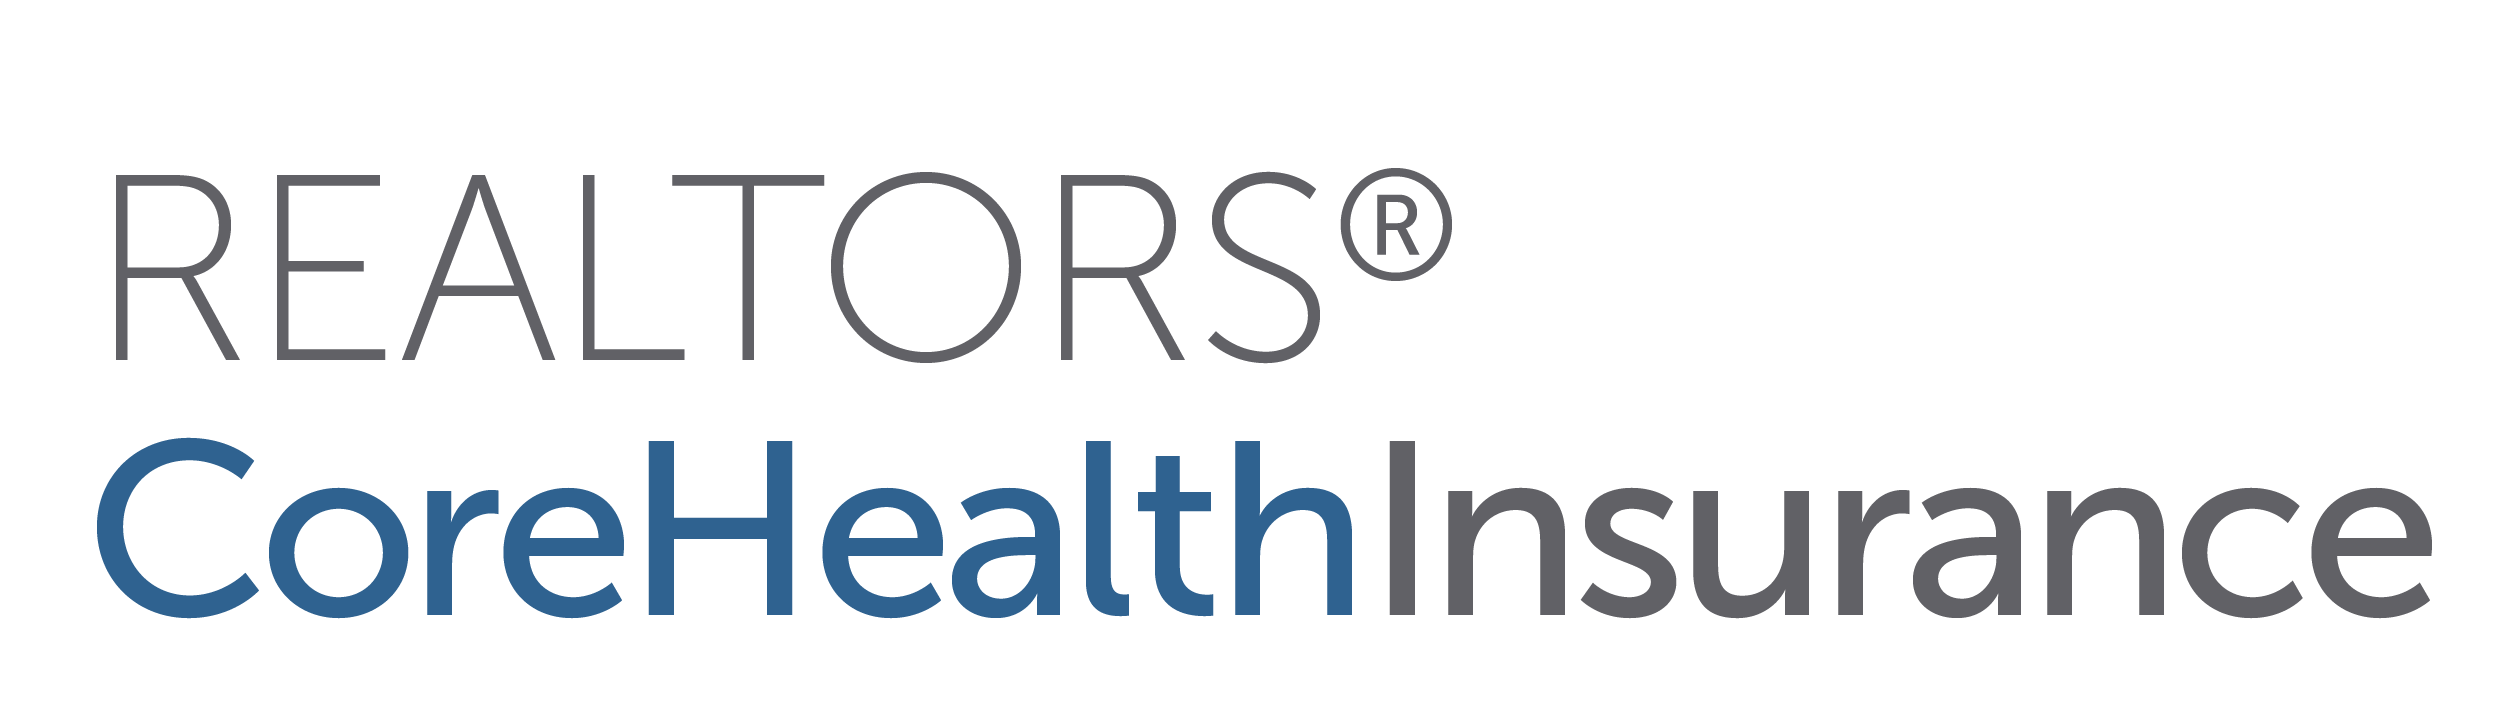 Realtors Core Health insurance product logo